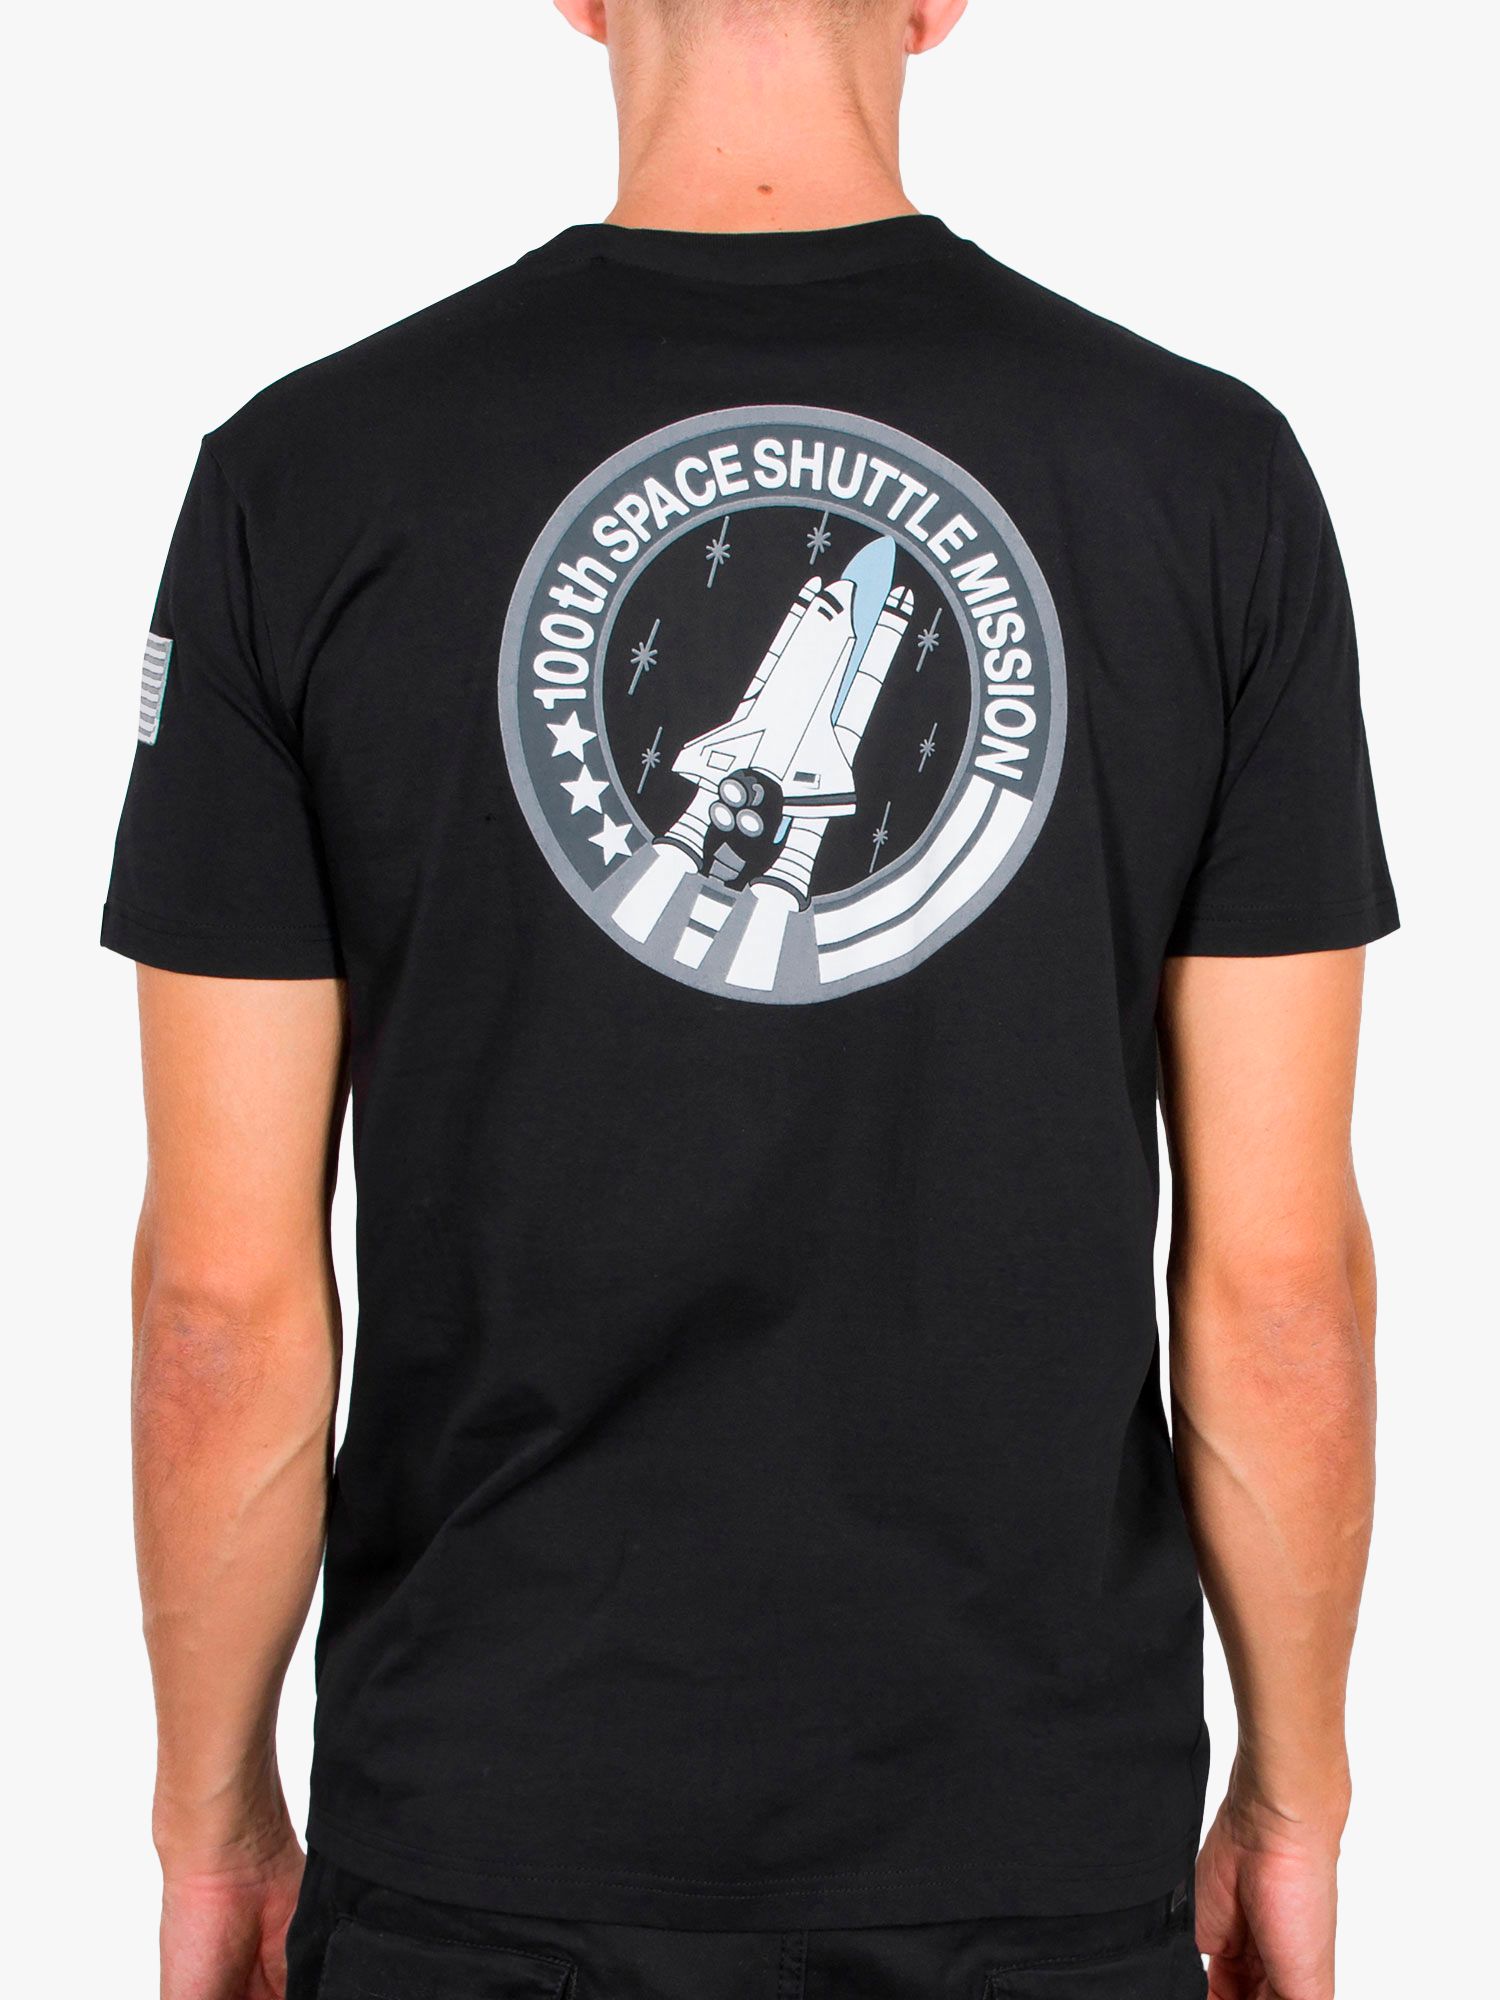 T-Shirt, Cotton Partners Shuttle Alpha Industries NASA Black at John X Space Jersey & Lewis